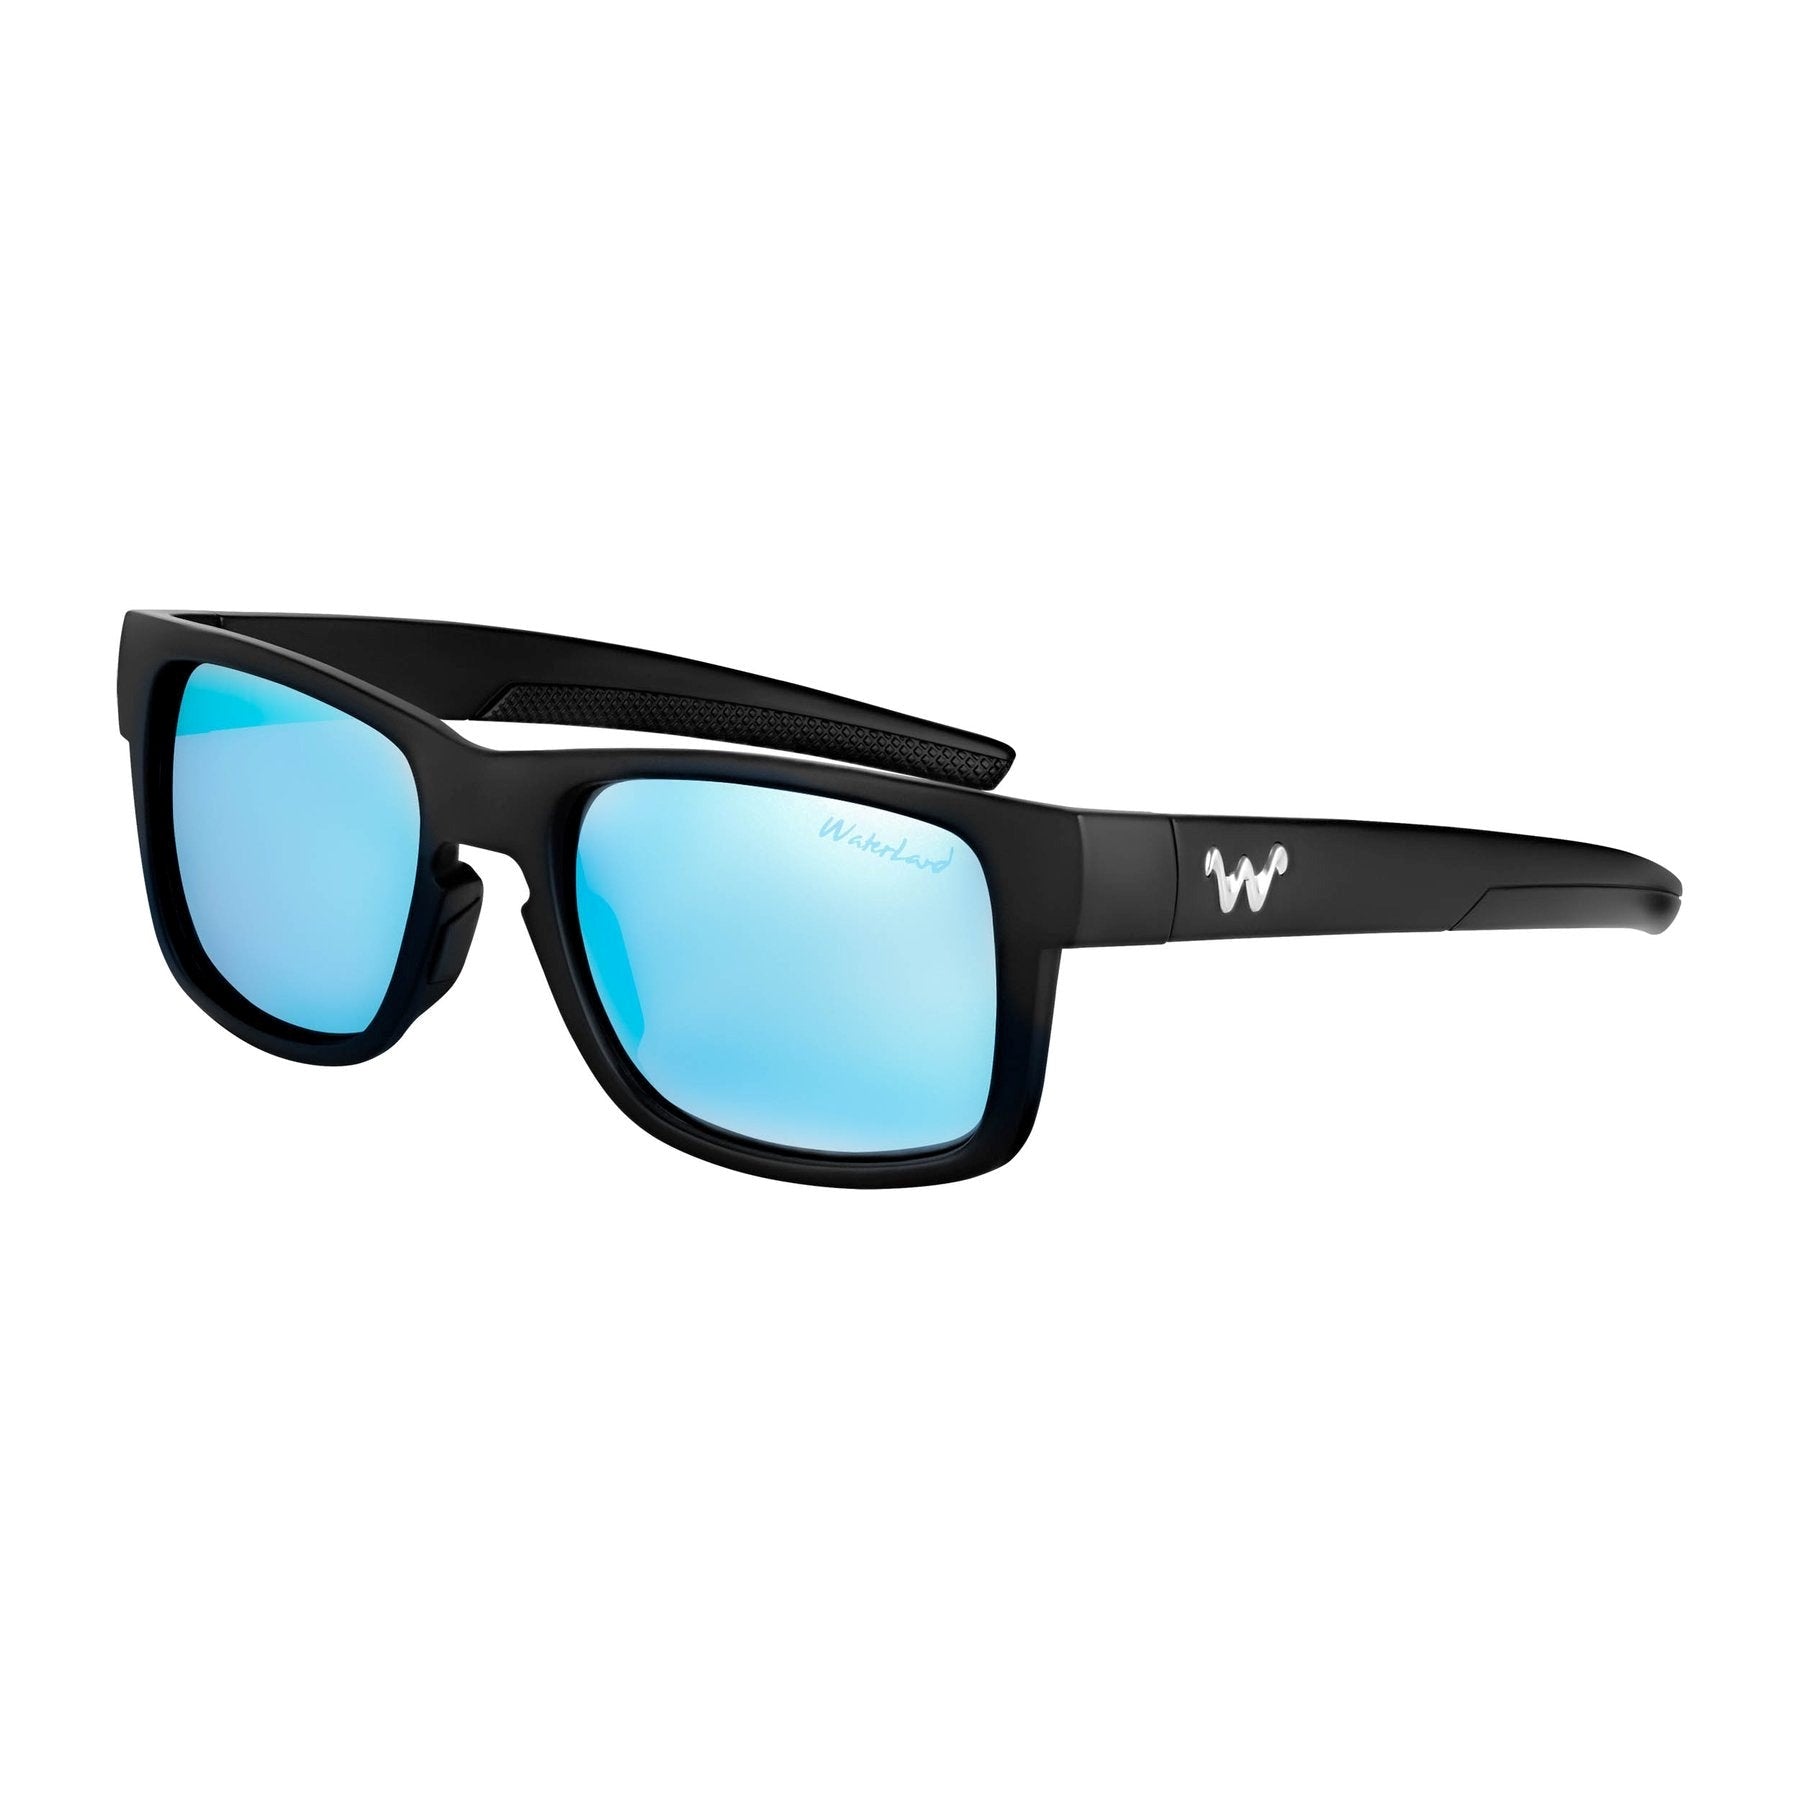 Waterland Hybro Polarized Sunglasses